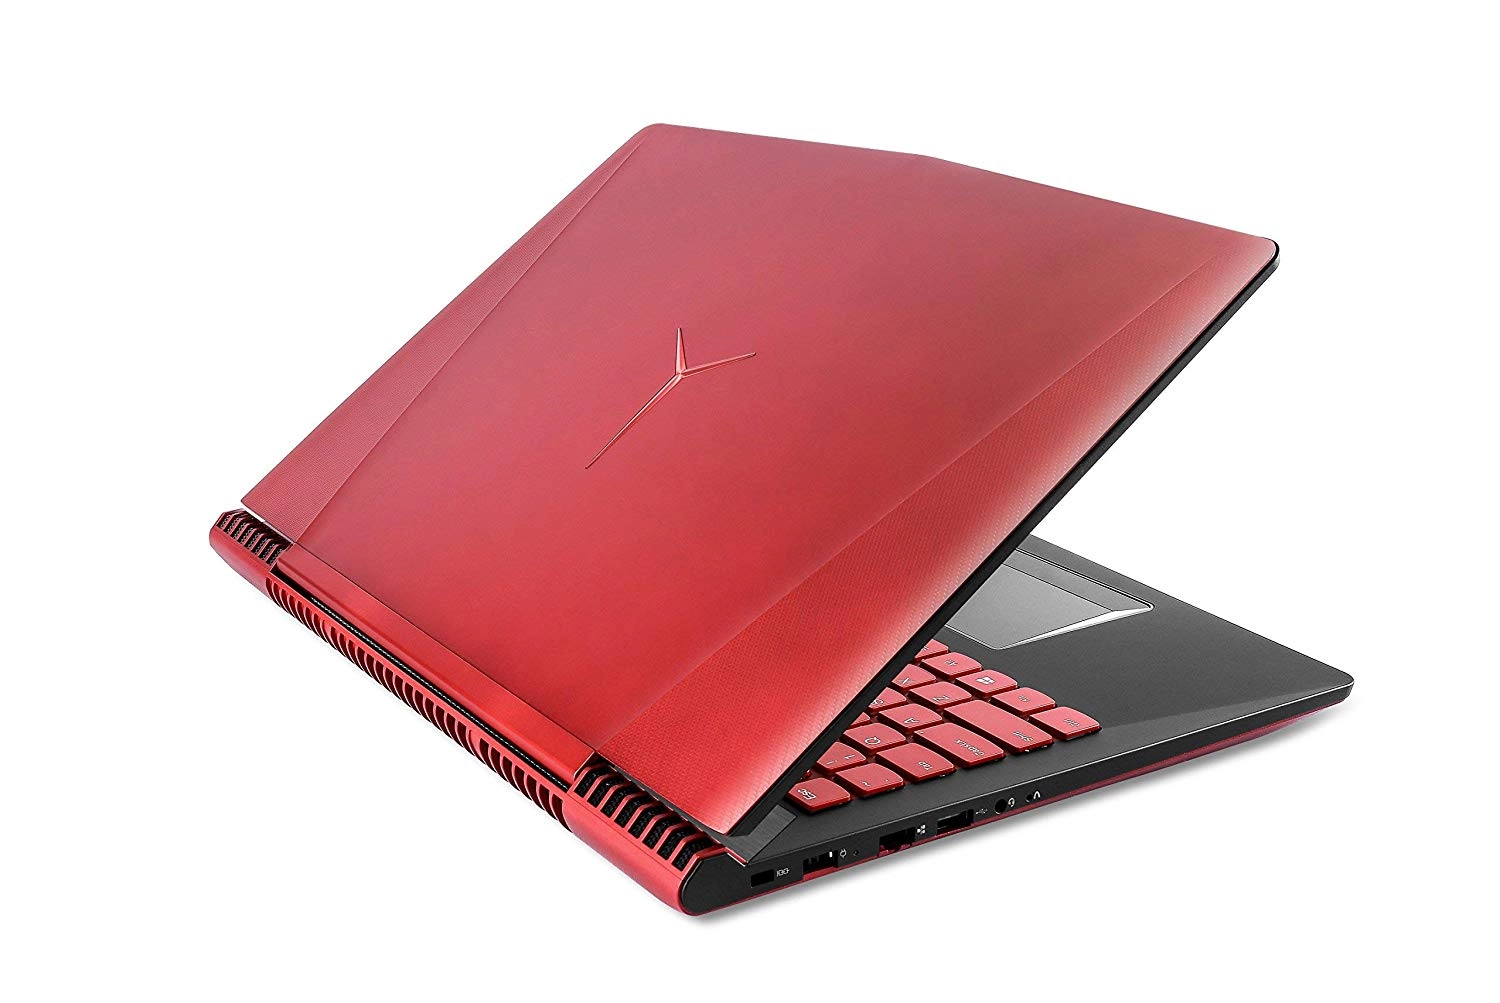 Lenovo Legion Y520 laptop image